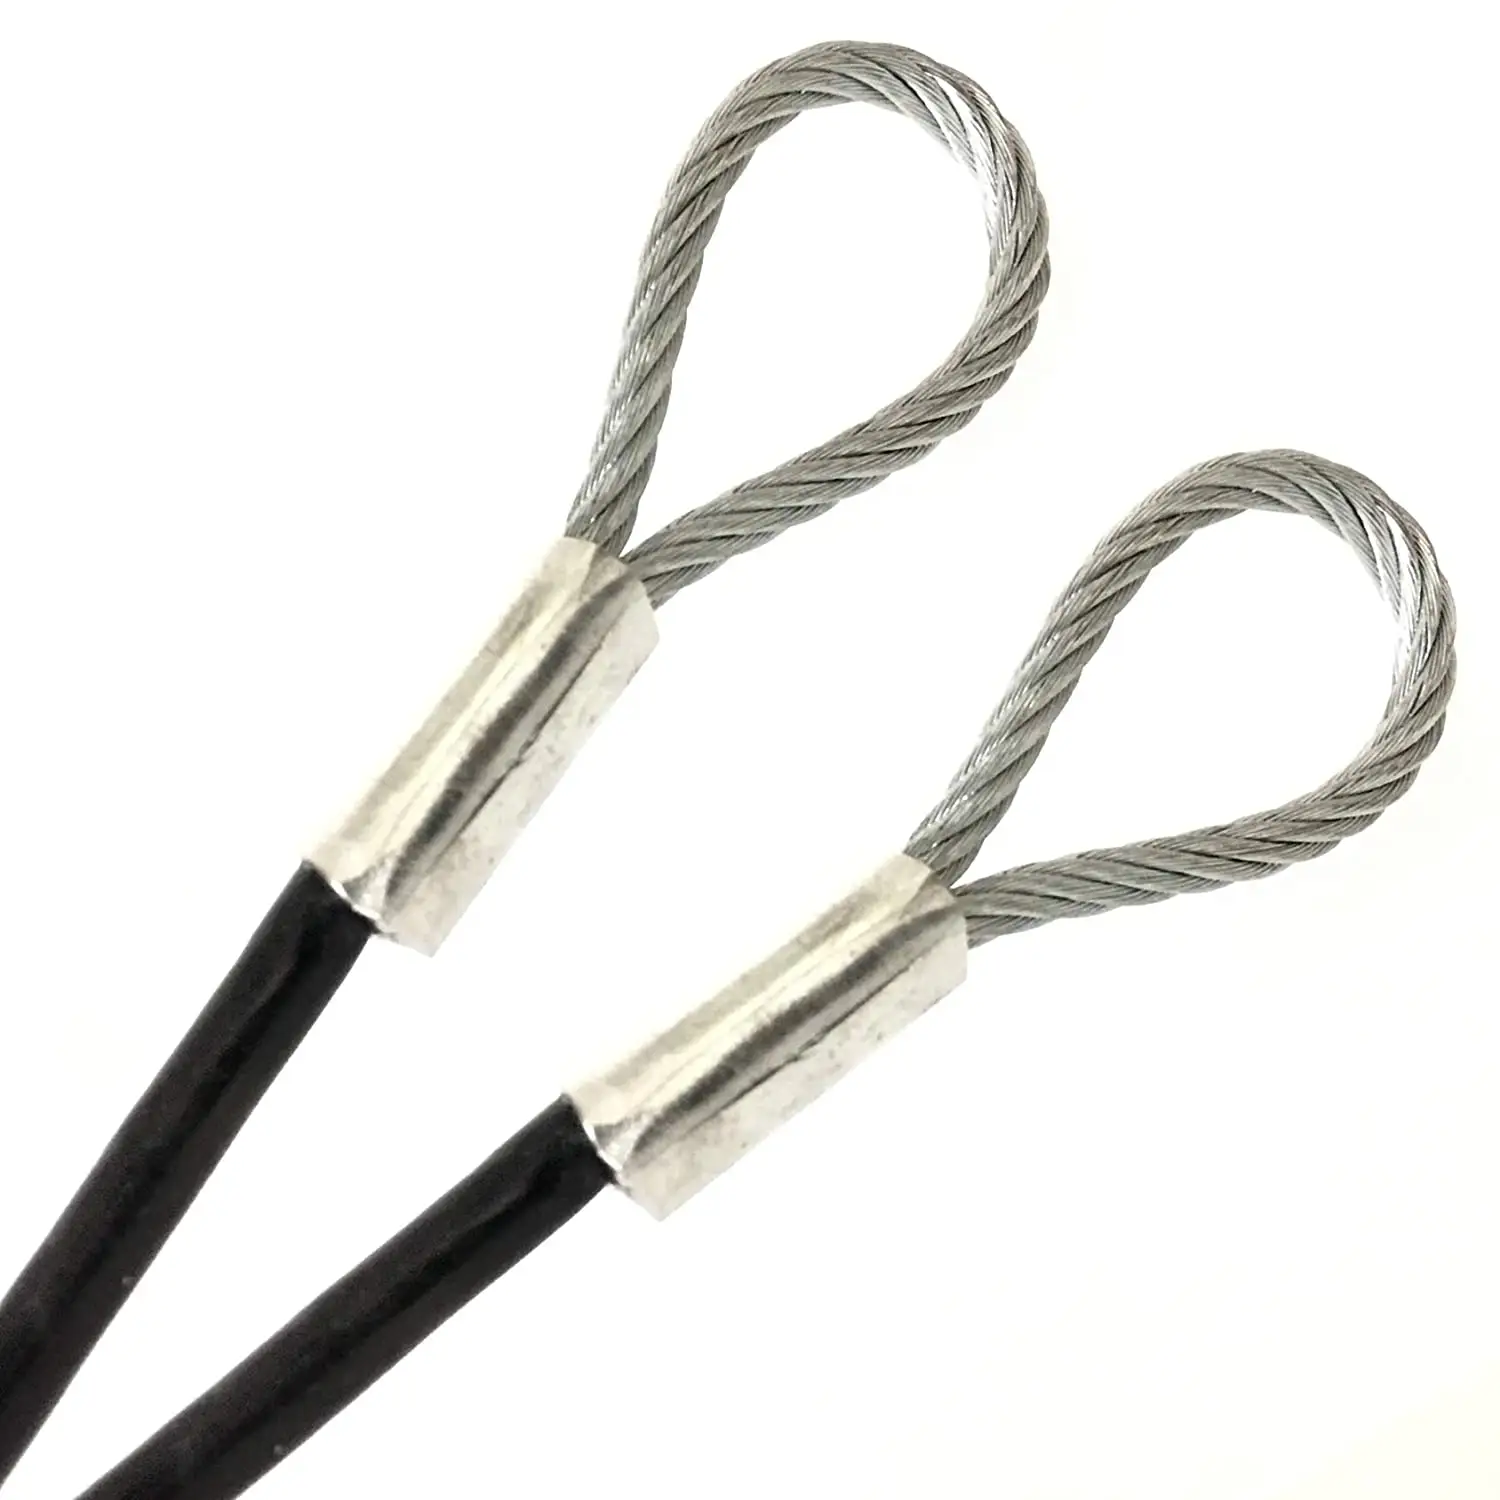 Cable de alambre Nirosta 3 mm, 20 m, acero inoxidable, 7 x 19 mm, EN 1.4401, blando, A4, Nirosta